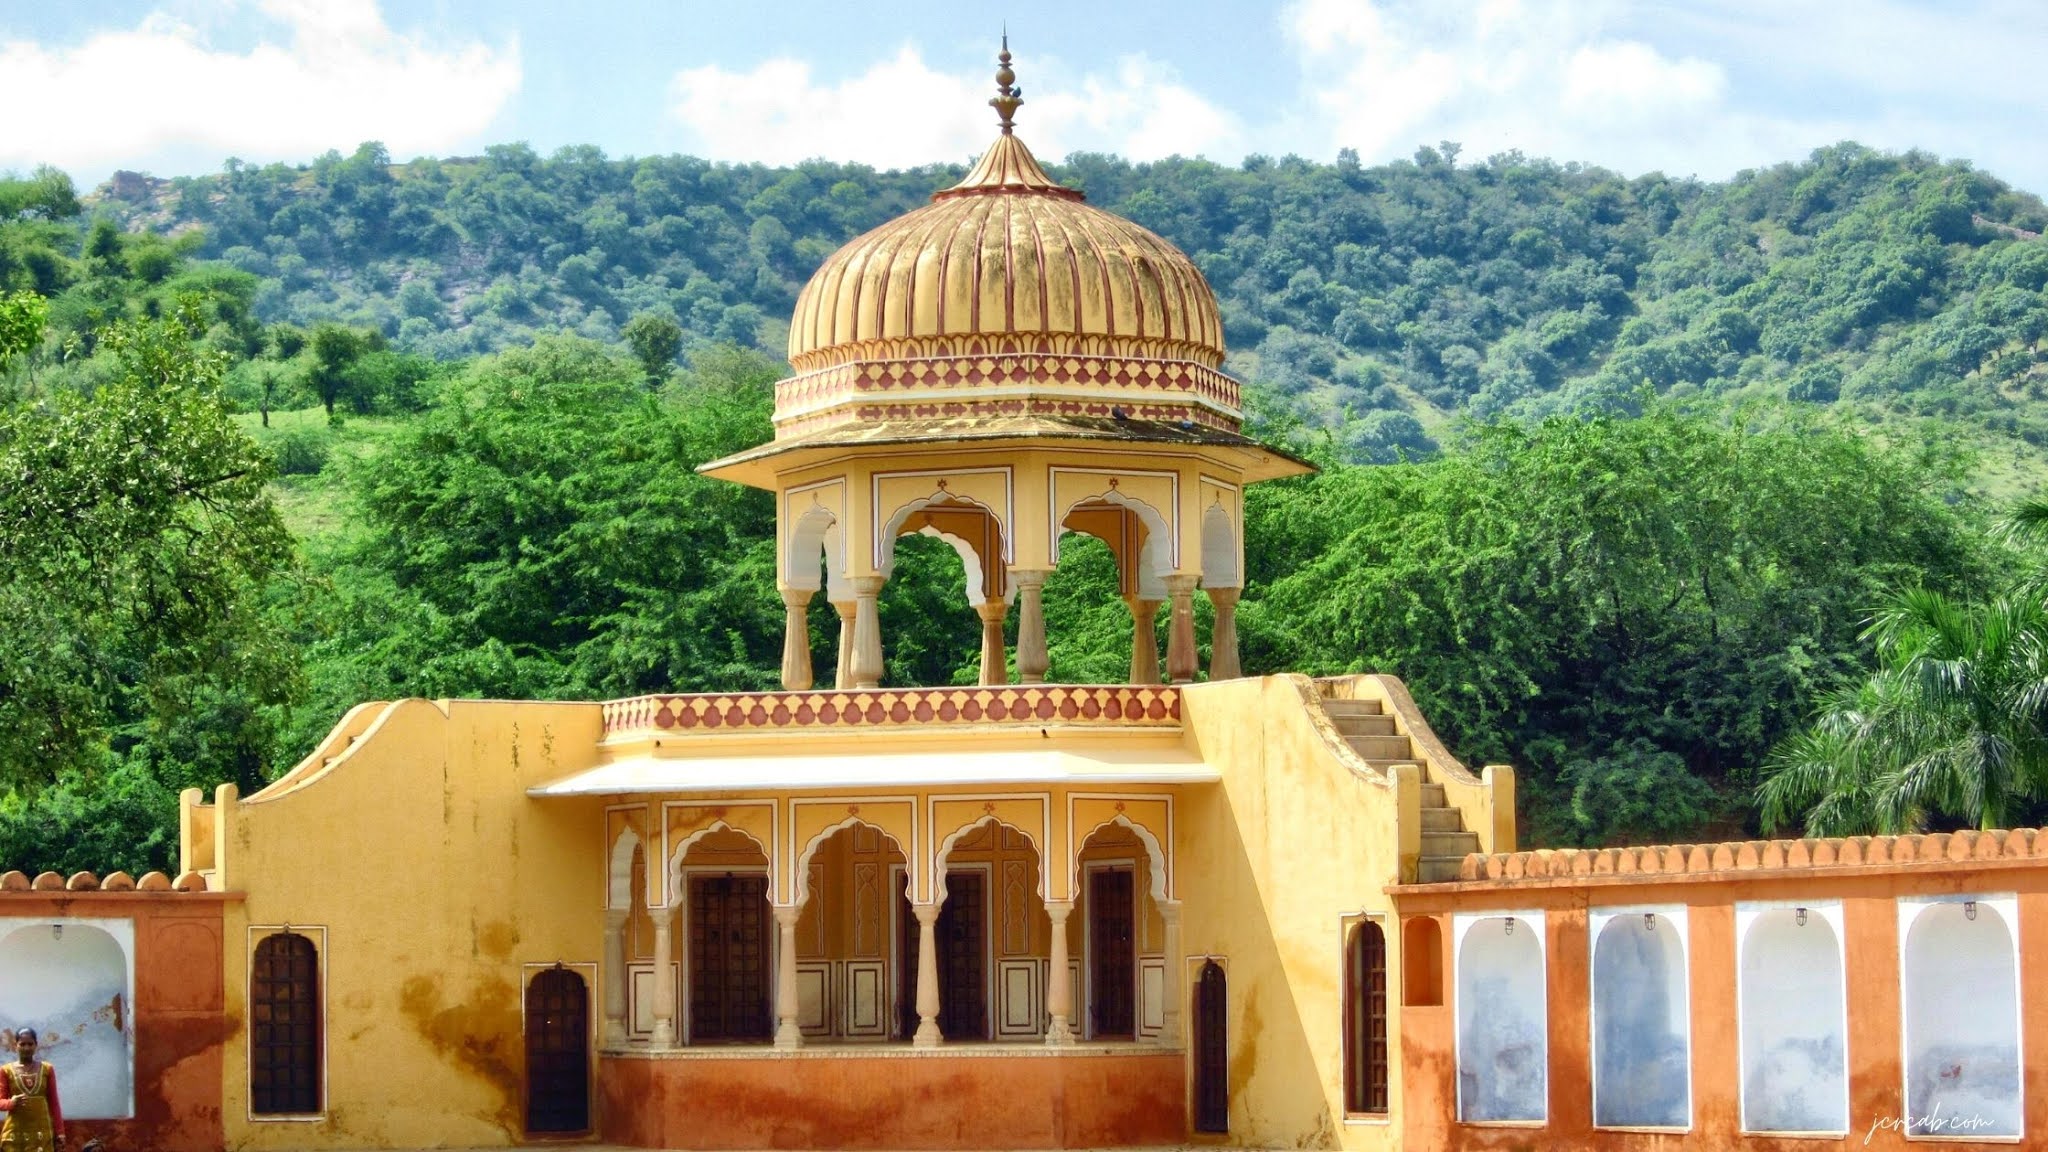 Kanak Vrindavan Garden in Jaipur - Architecture, Timing, Free